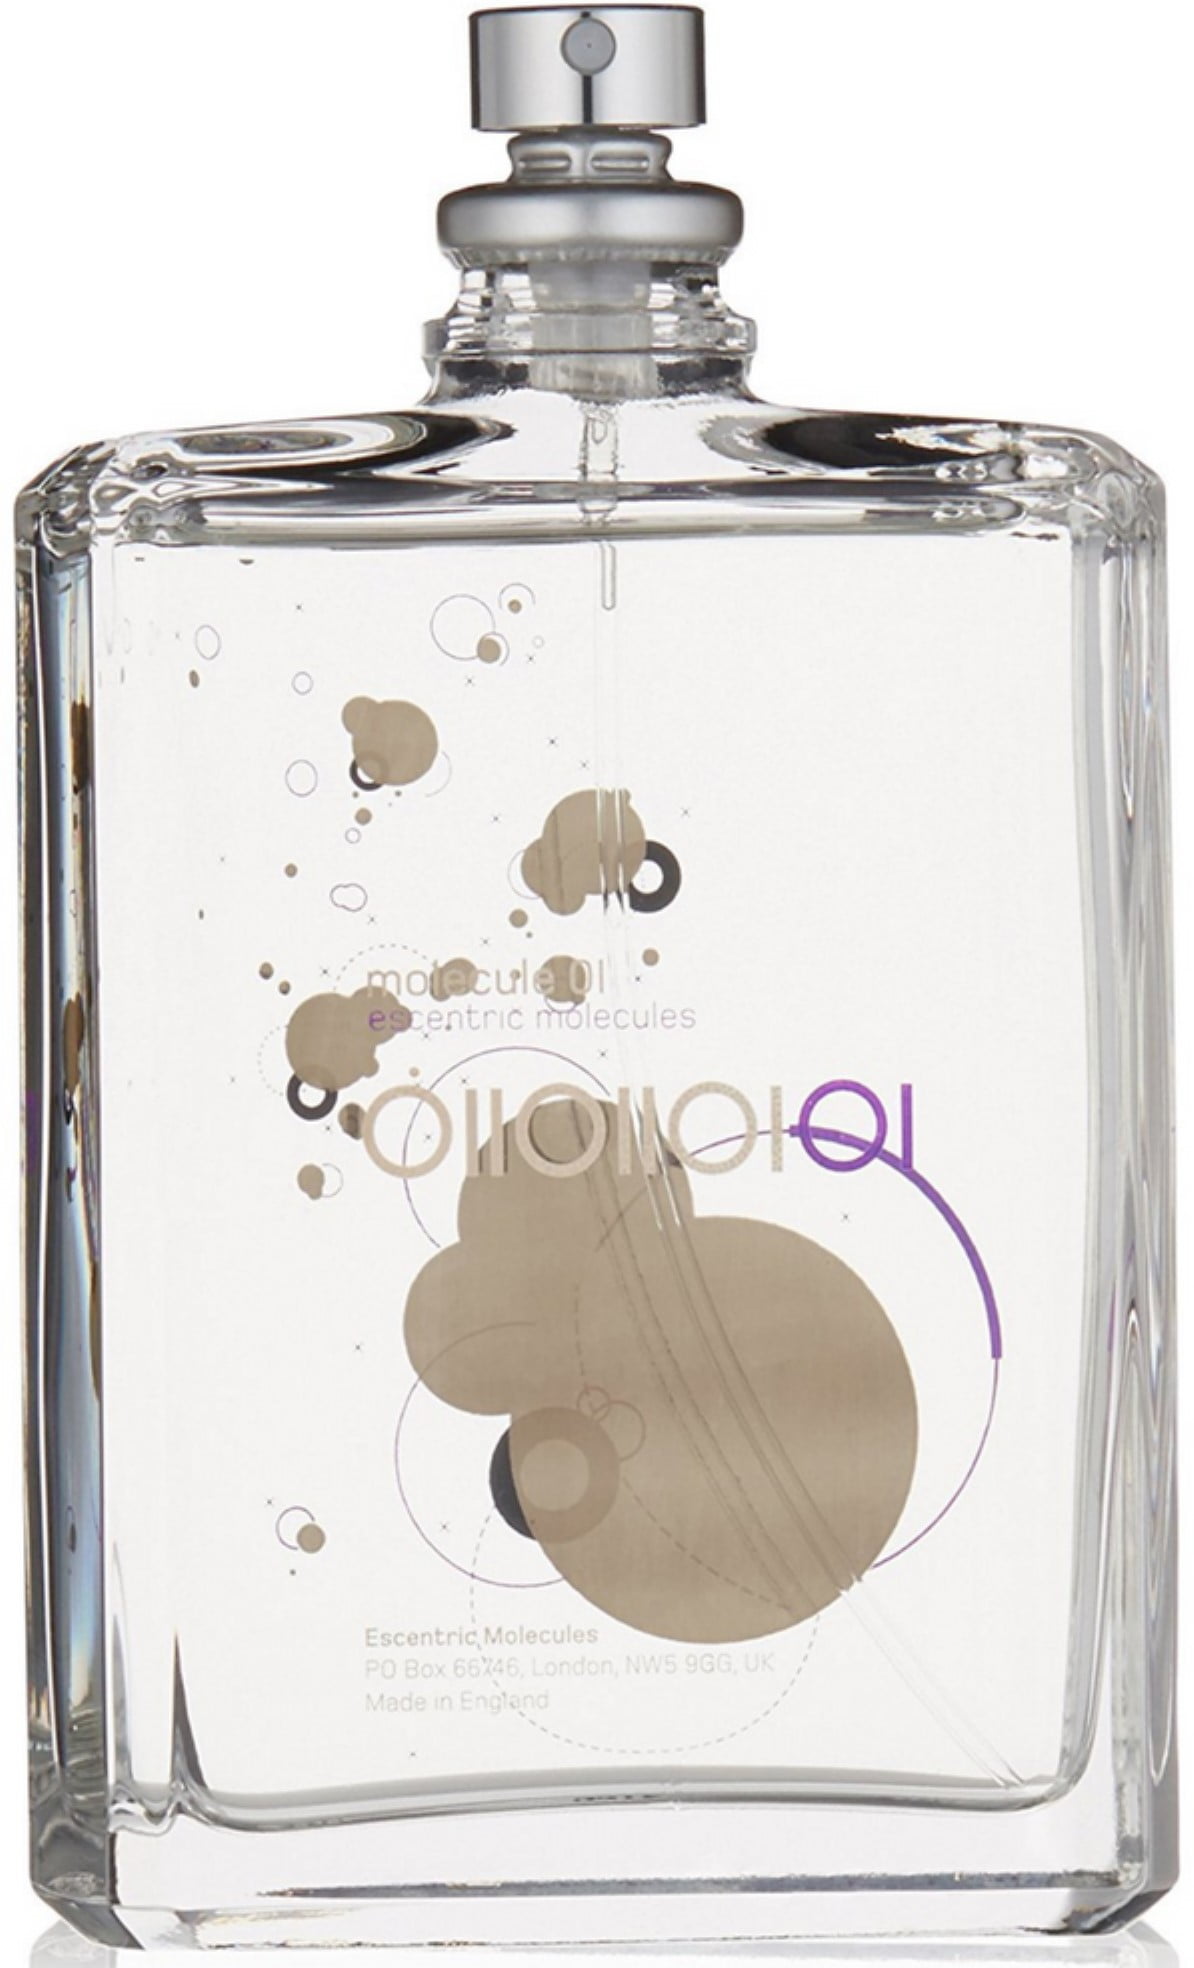 one molecule parfum